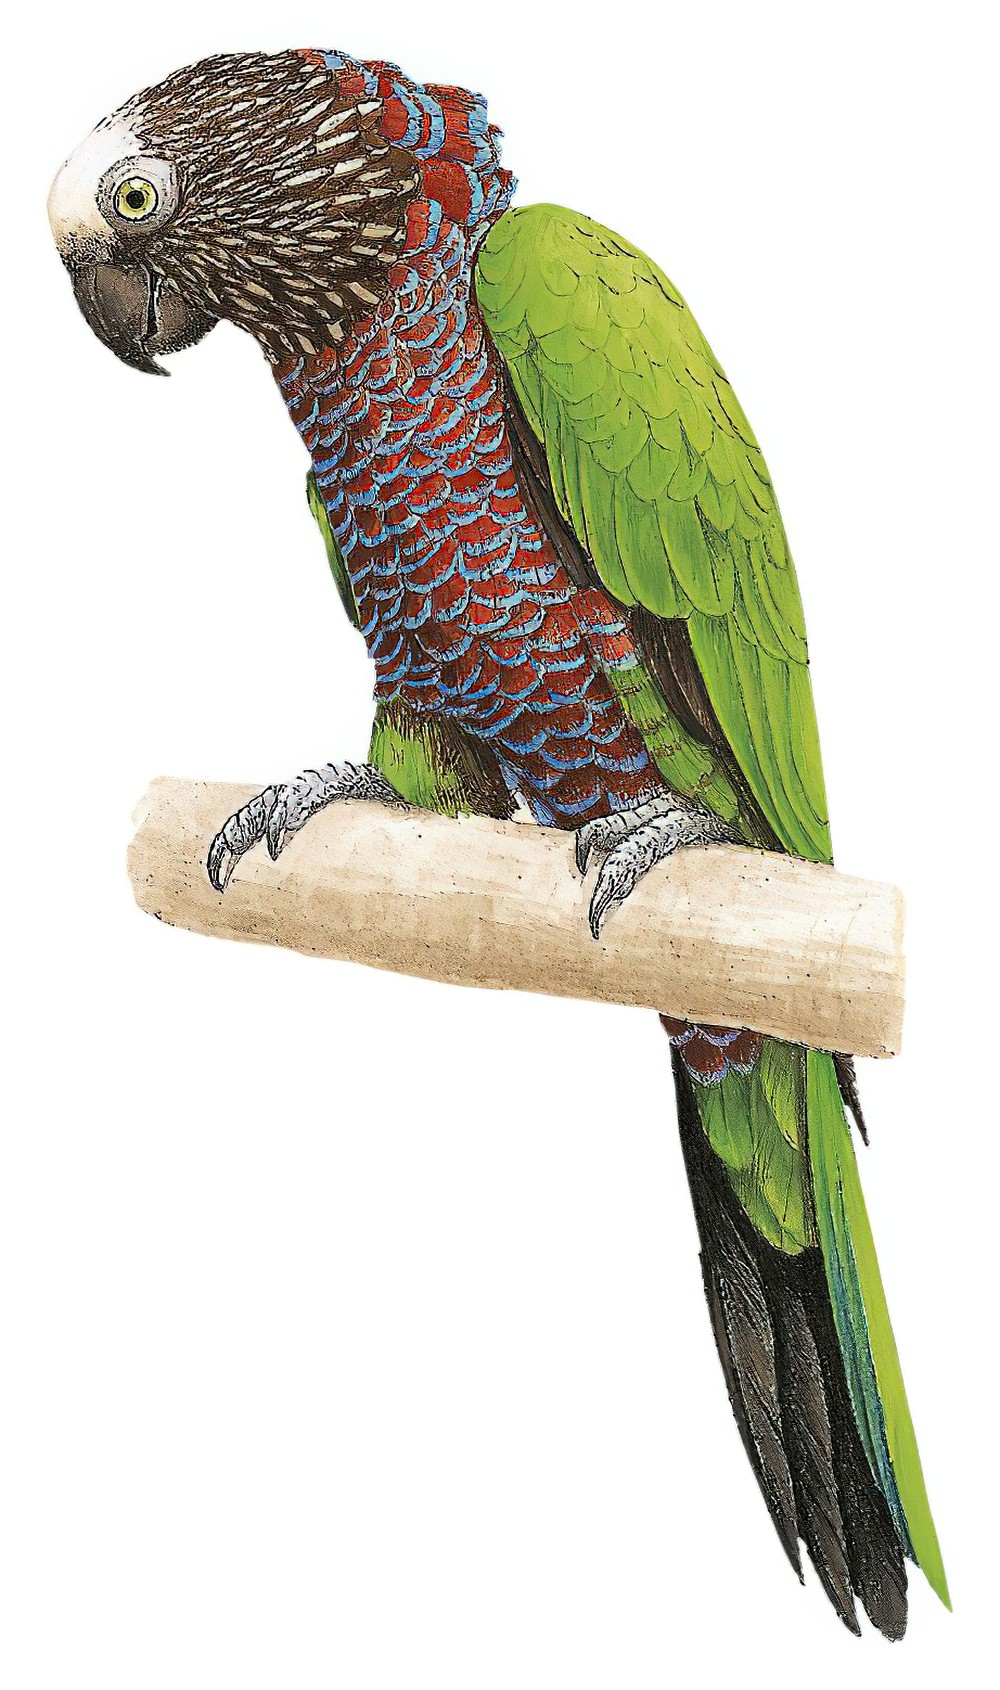 Red-fan Parrot / Deroptyus accipitrinus